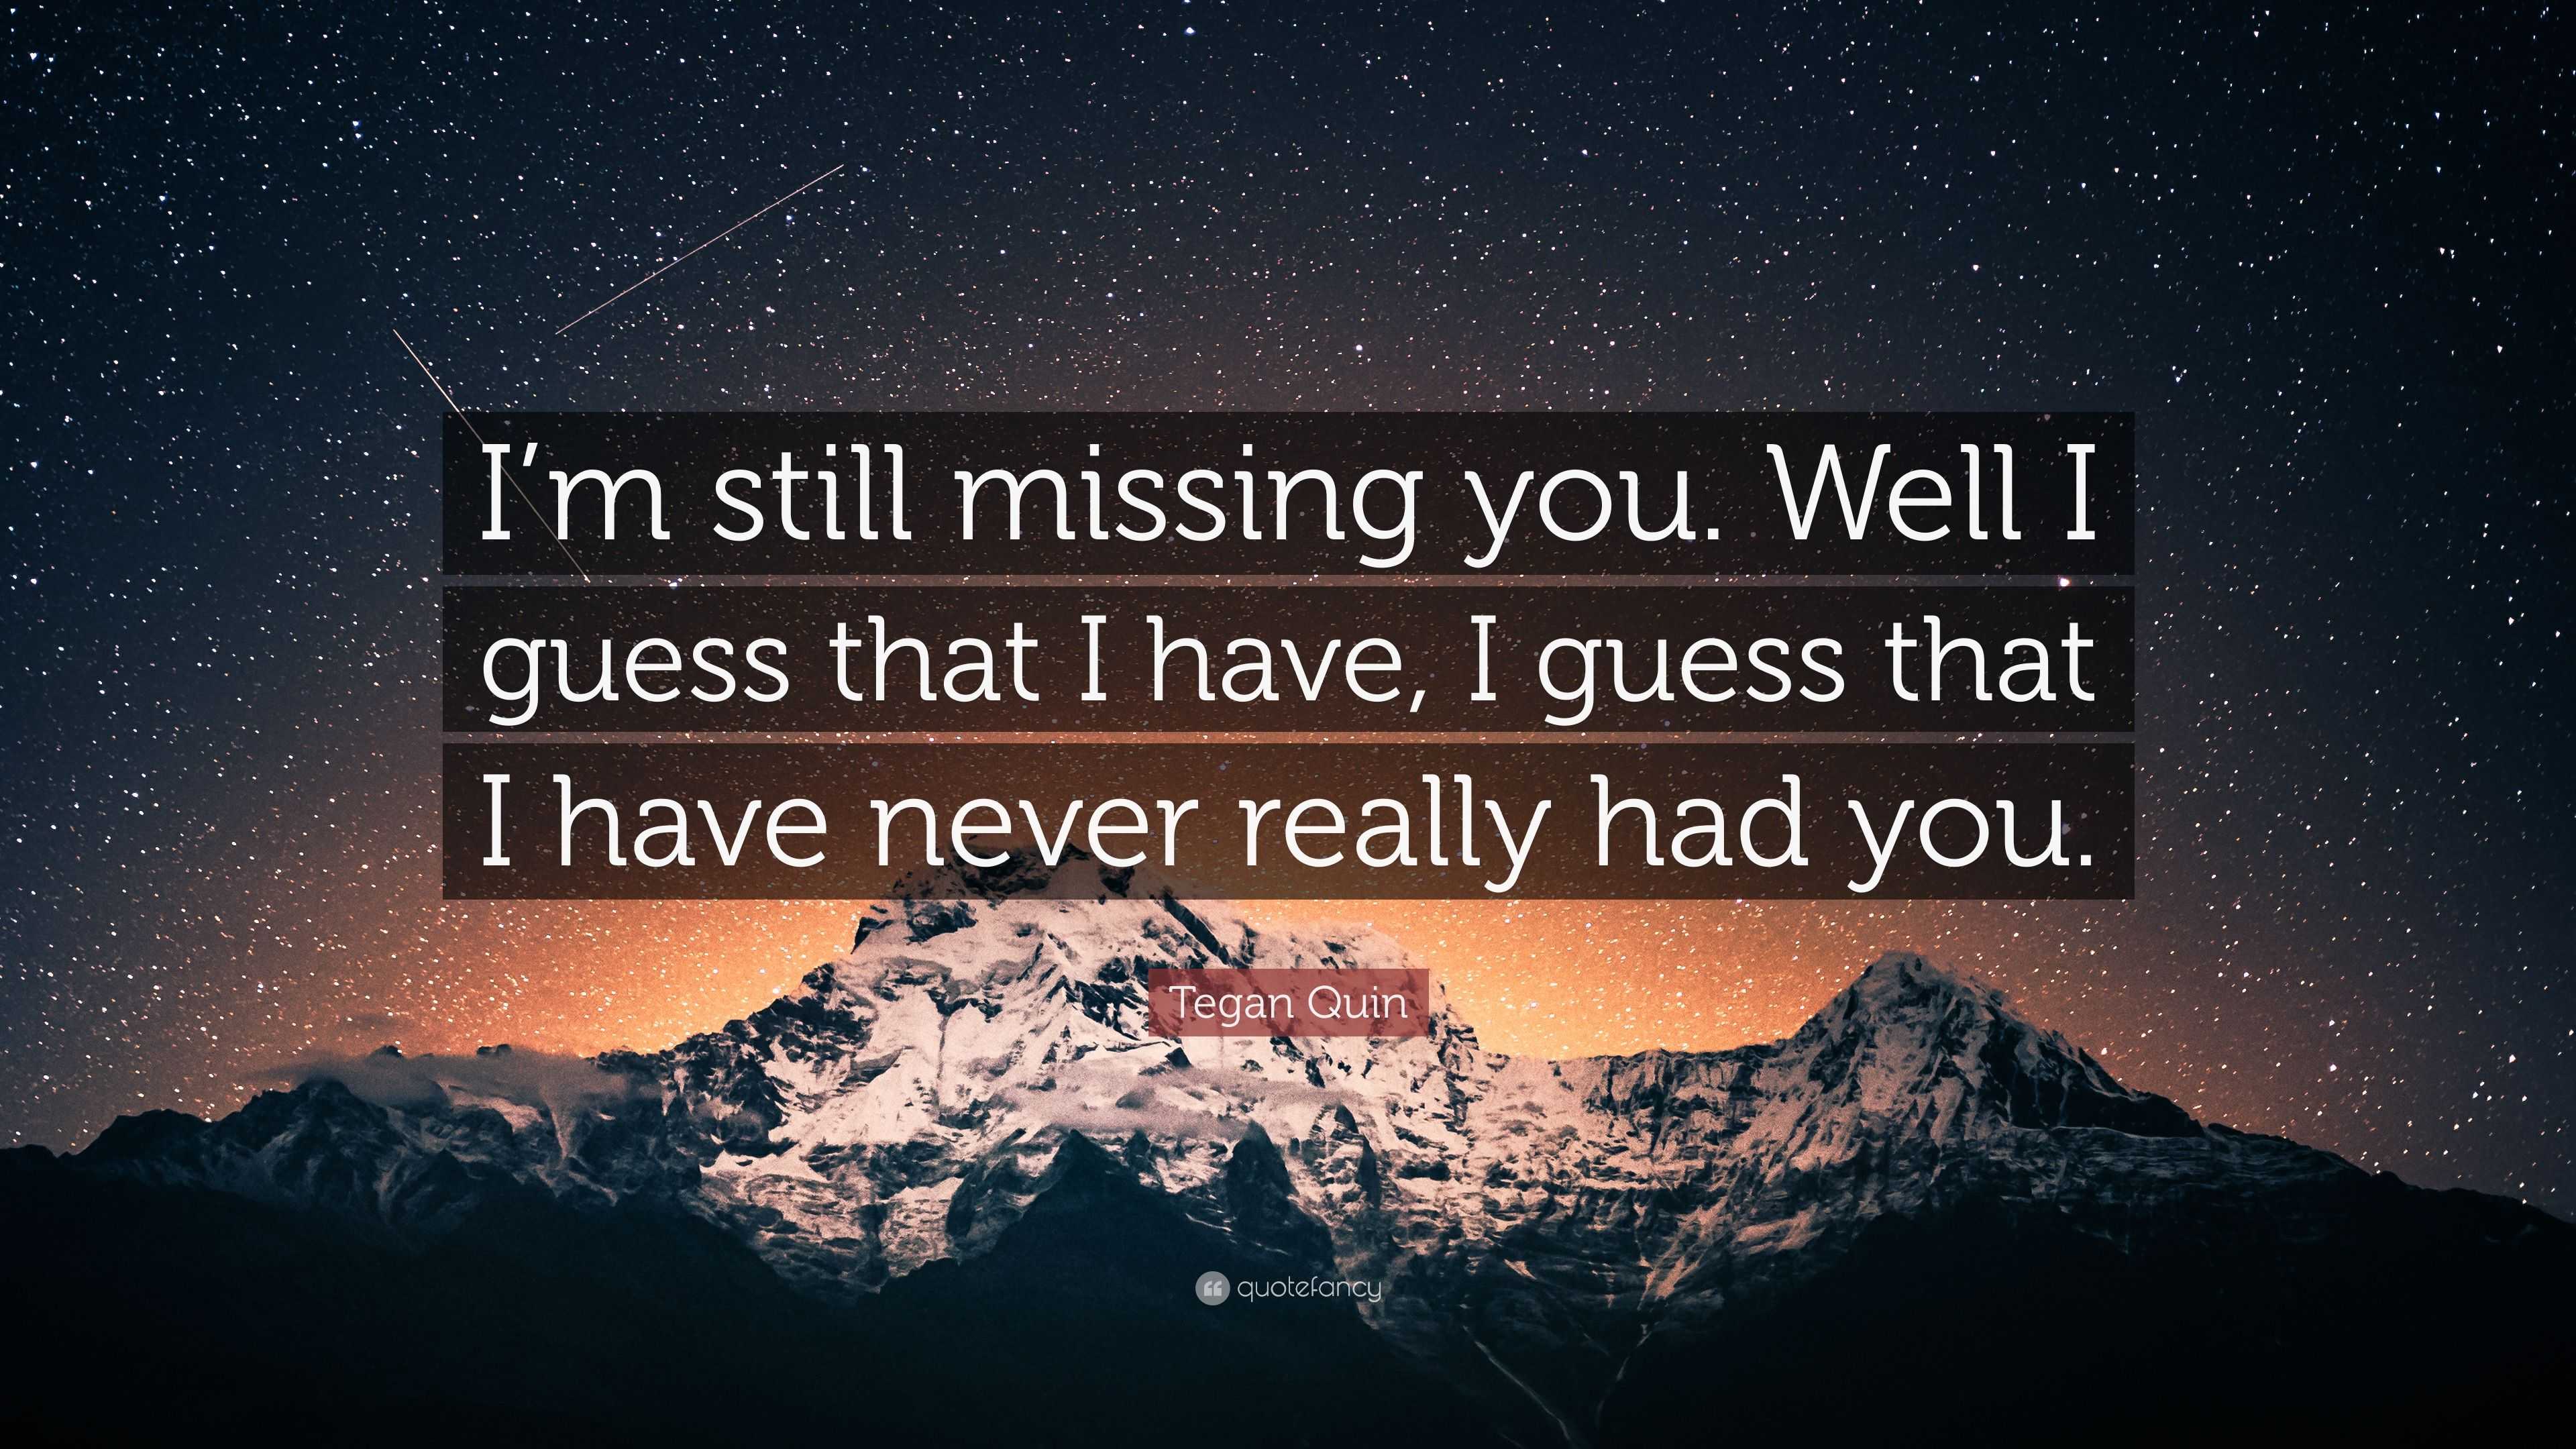 Tegan Quin “I'm still missing you. Well I guess that I I